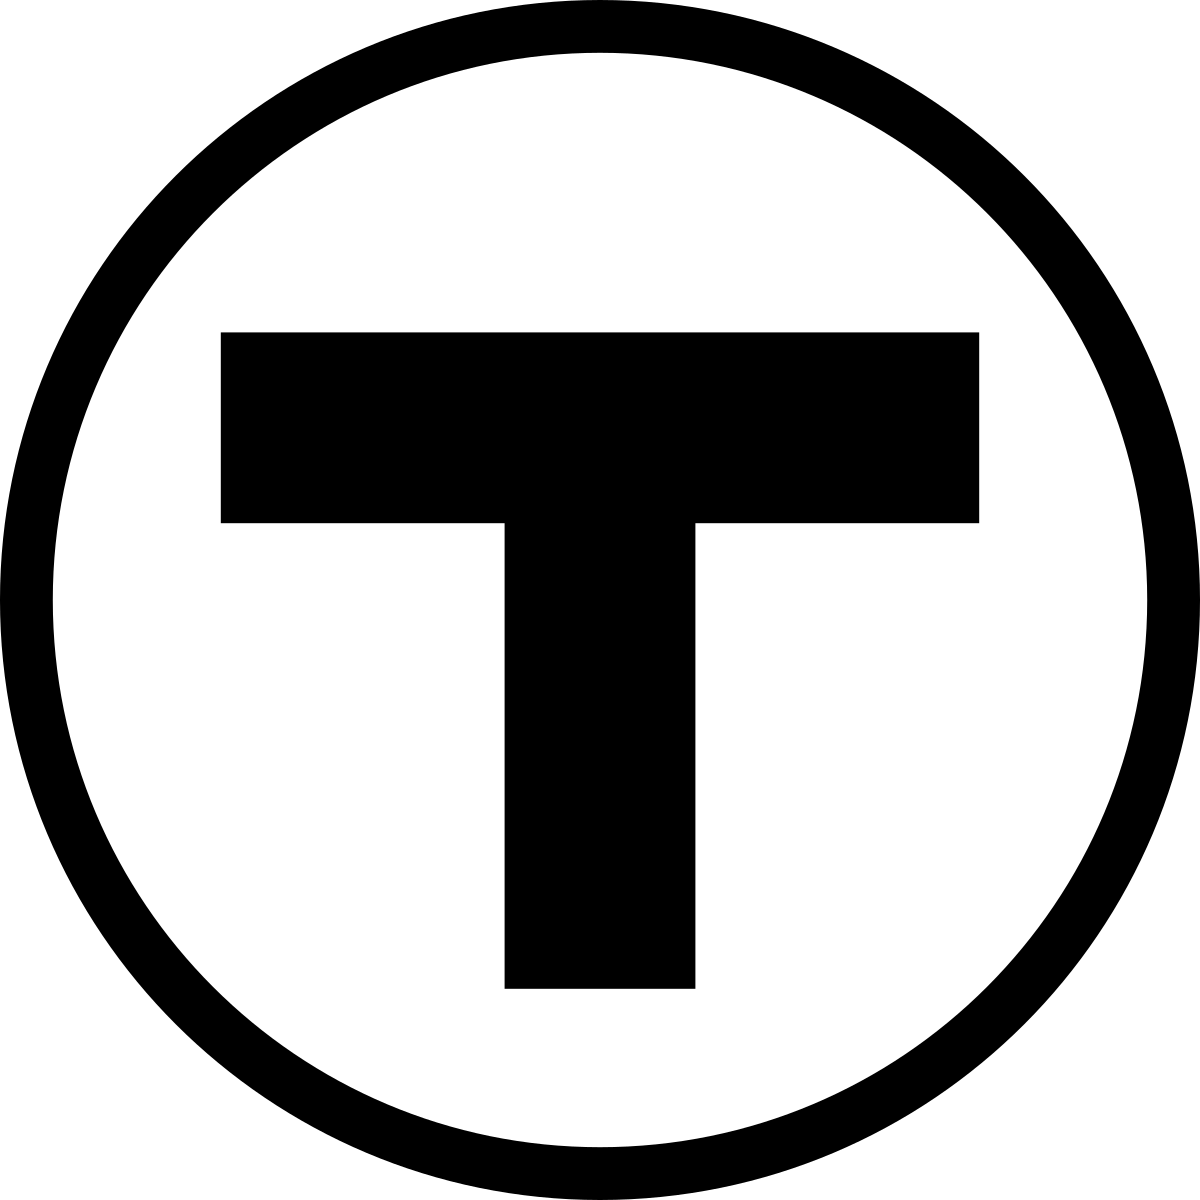 Boston T Logo - Massachusetts Bay Transportation Authority